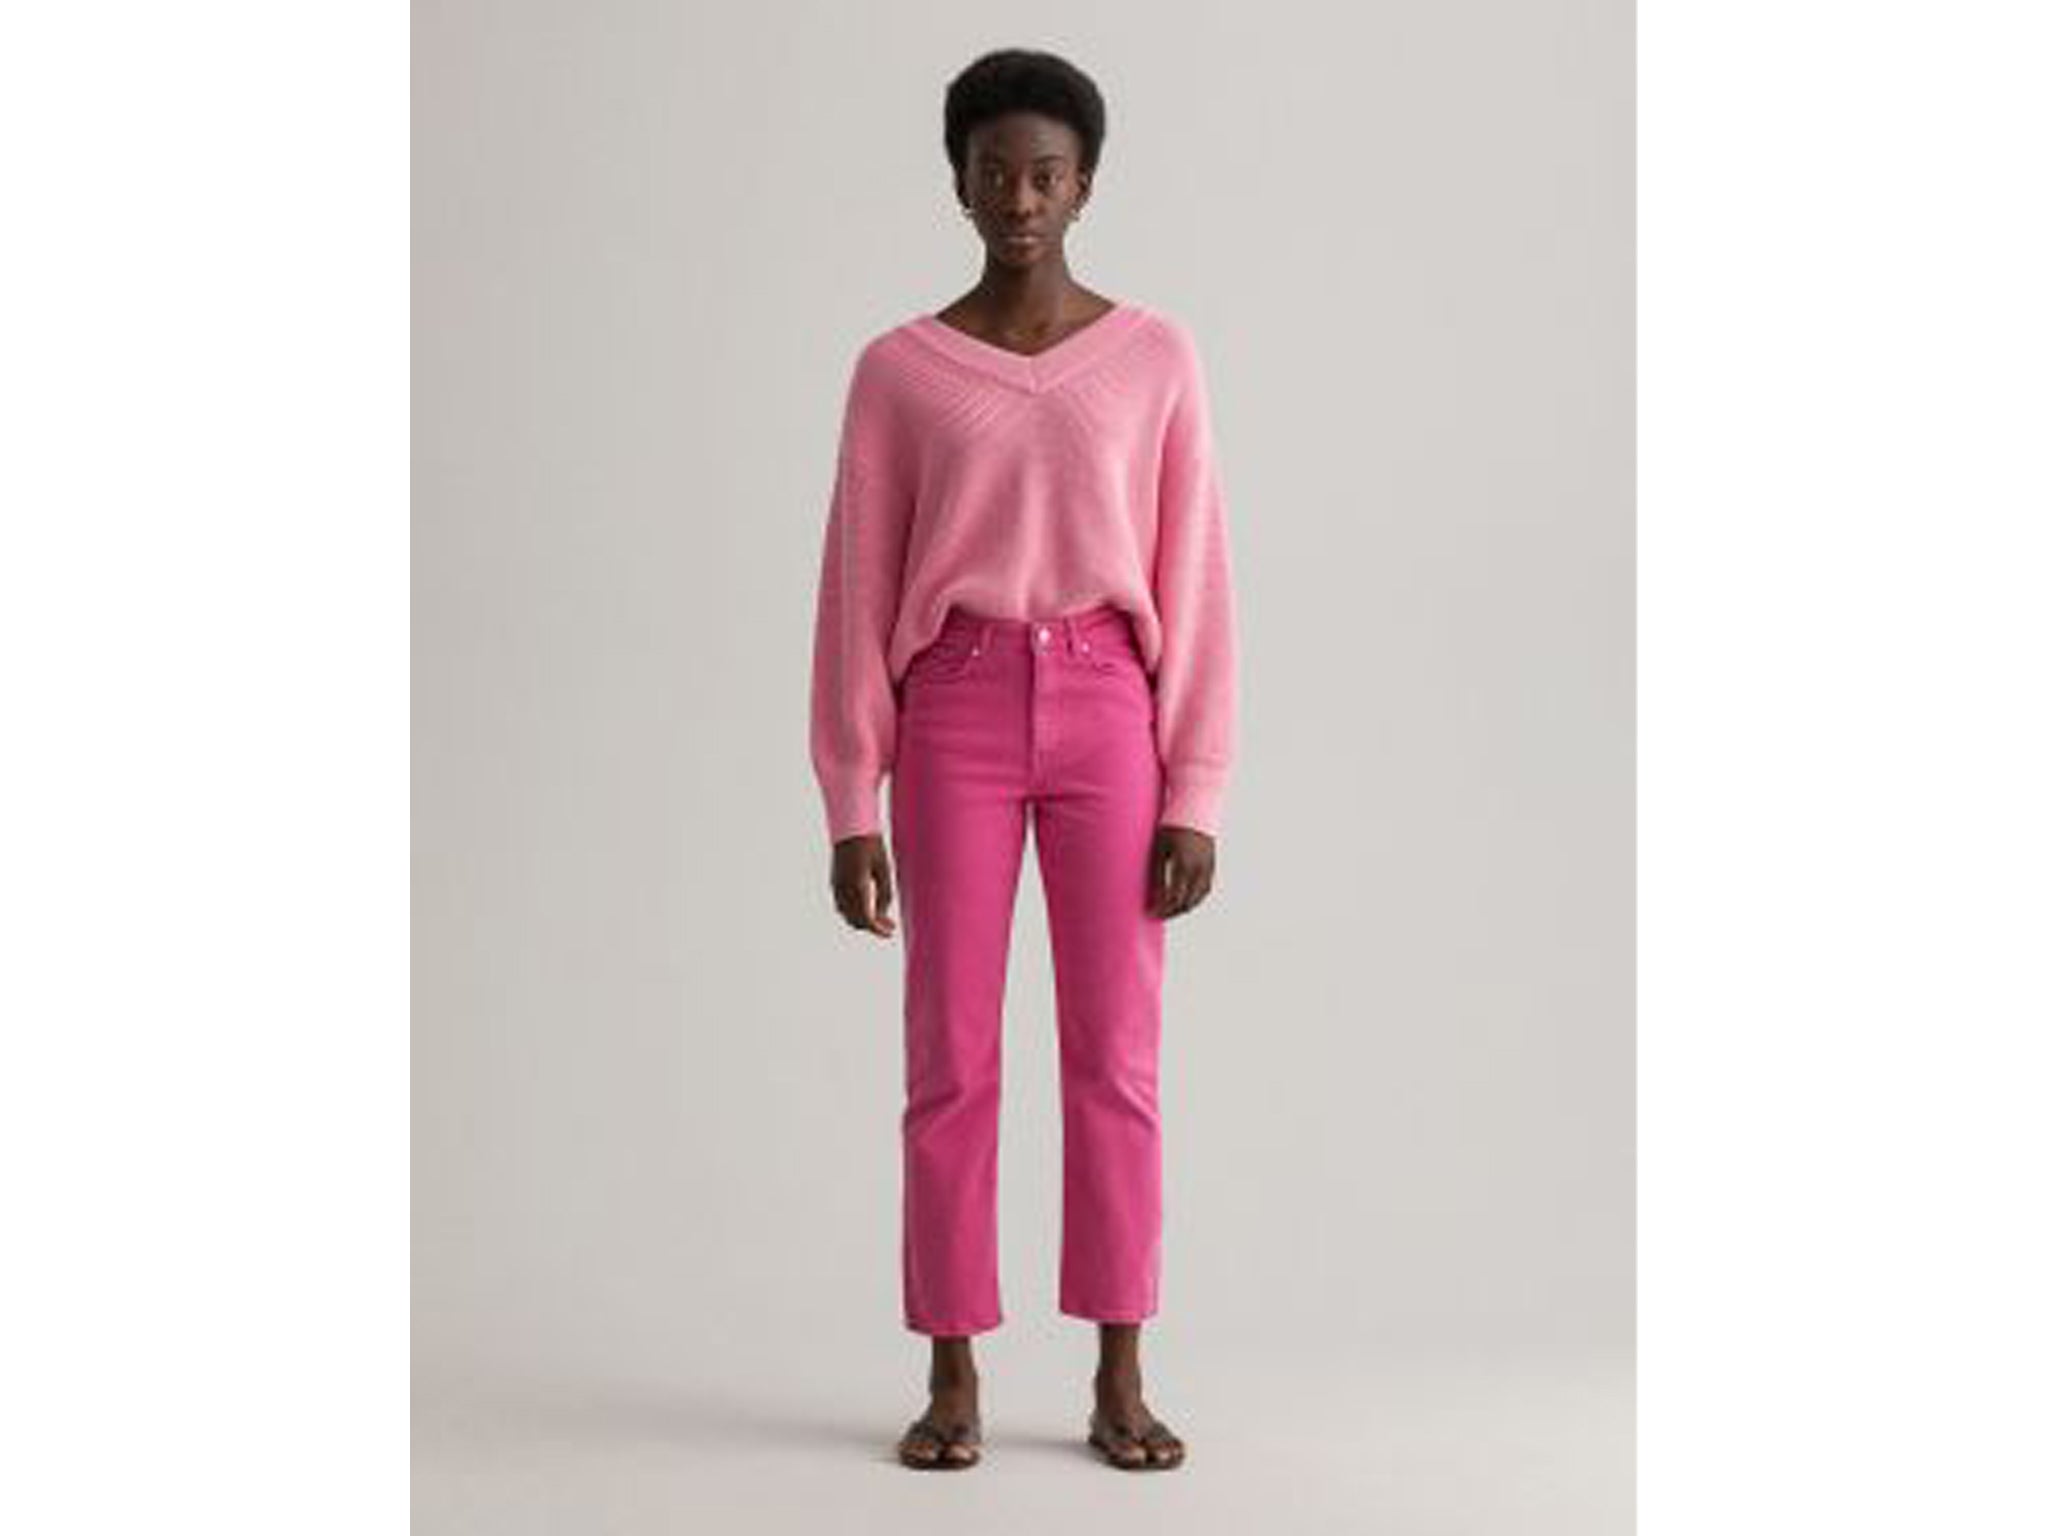 Zara's pink wide leg jeans are going viral on TikTok